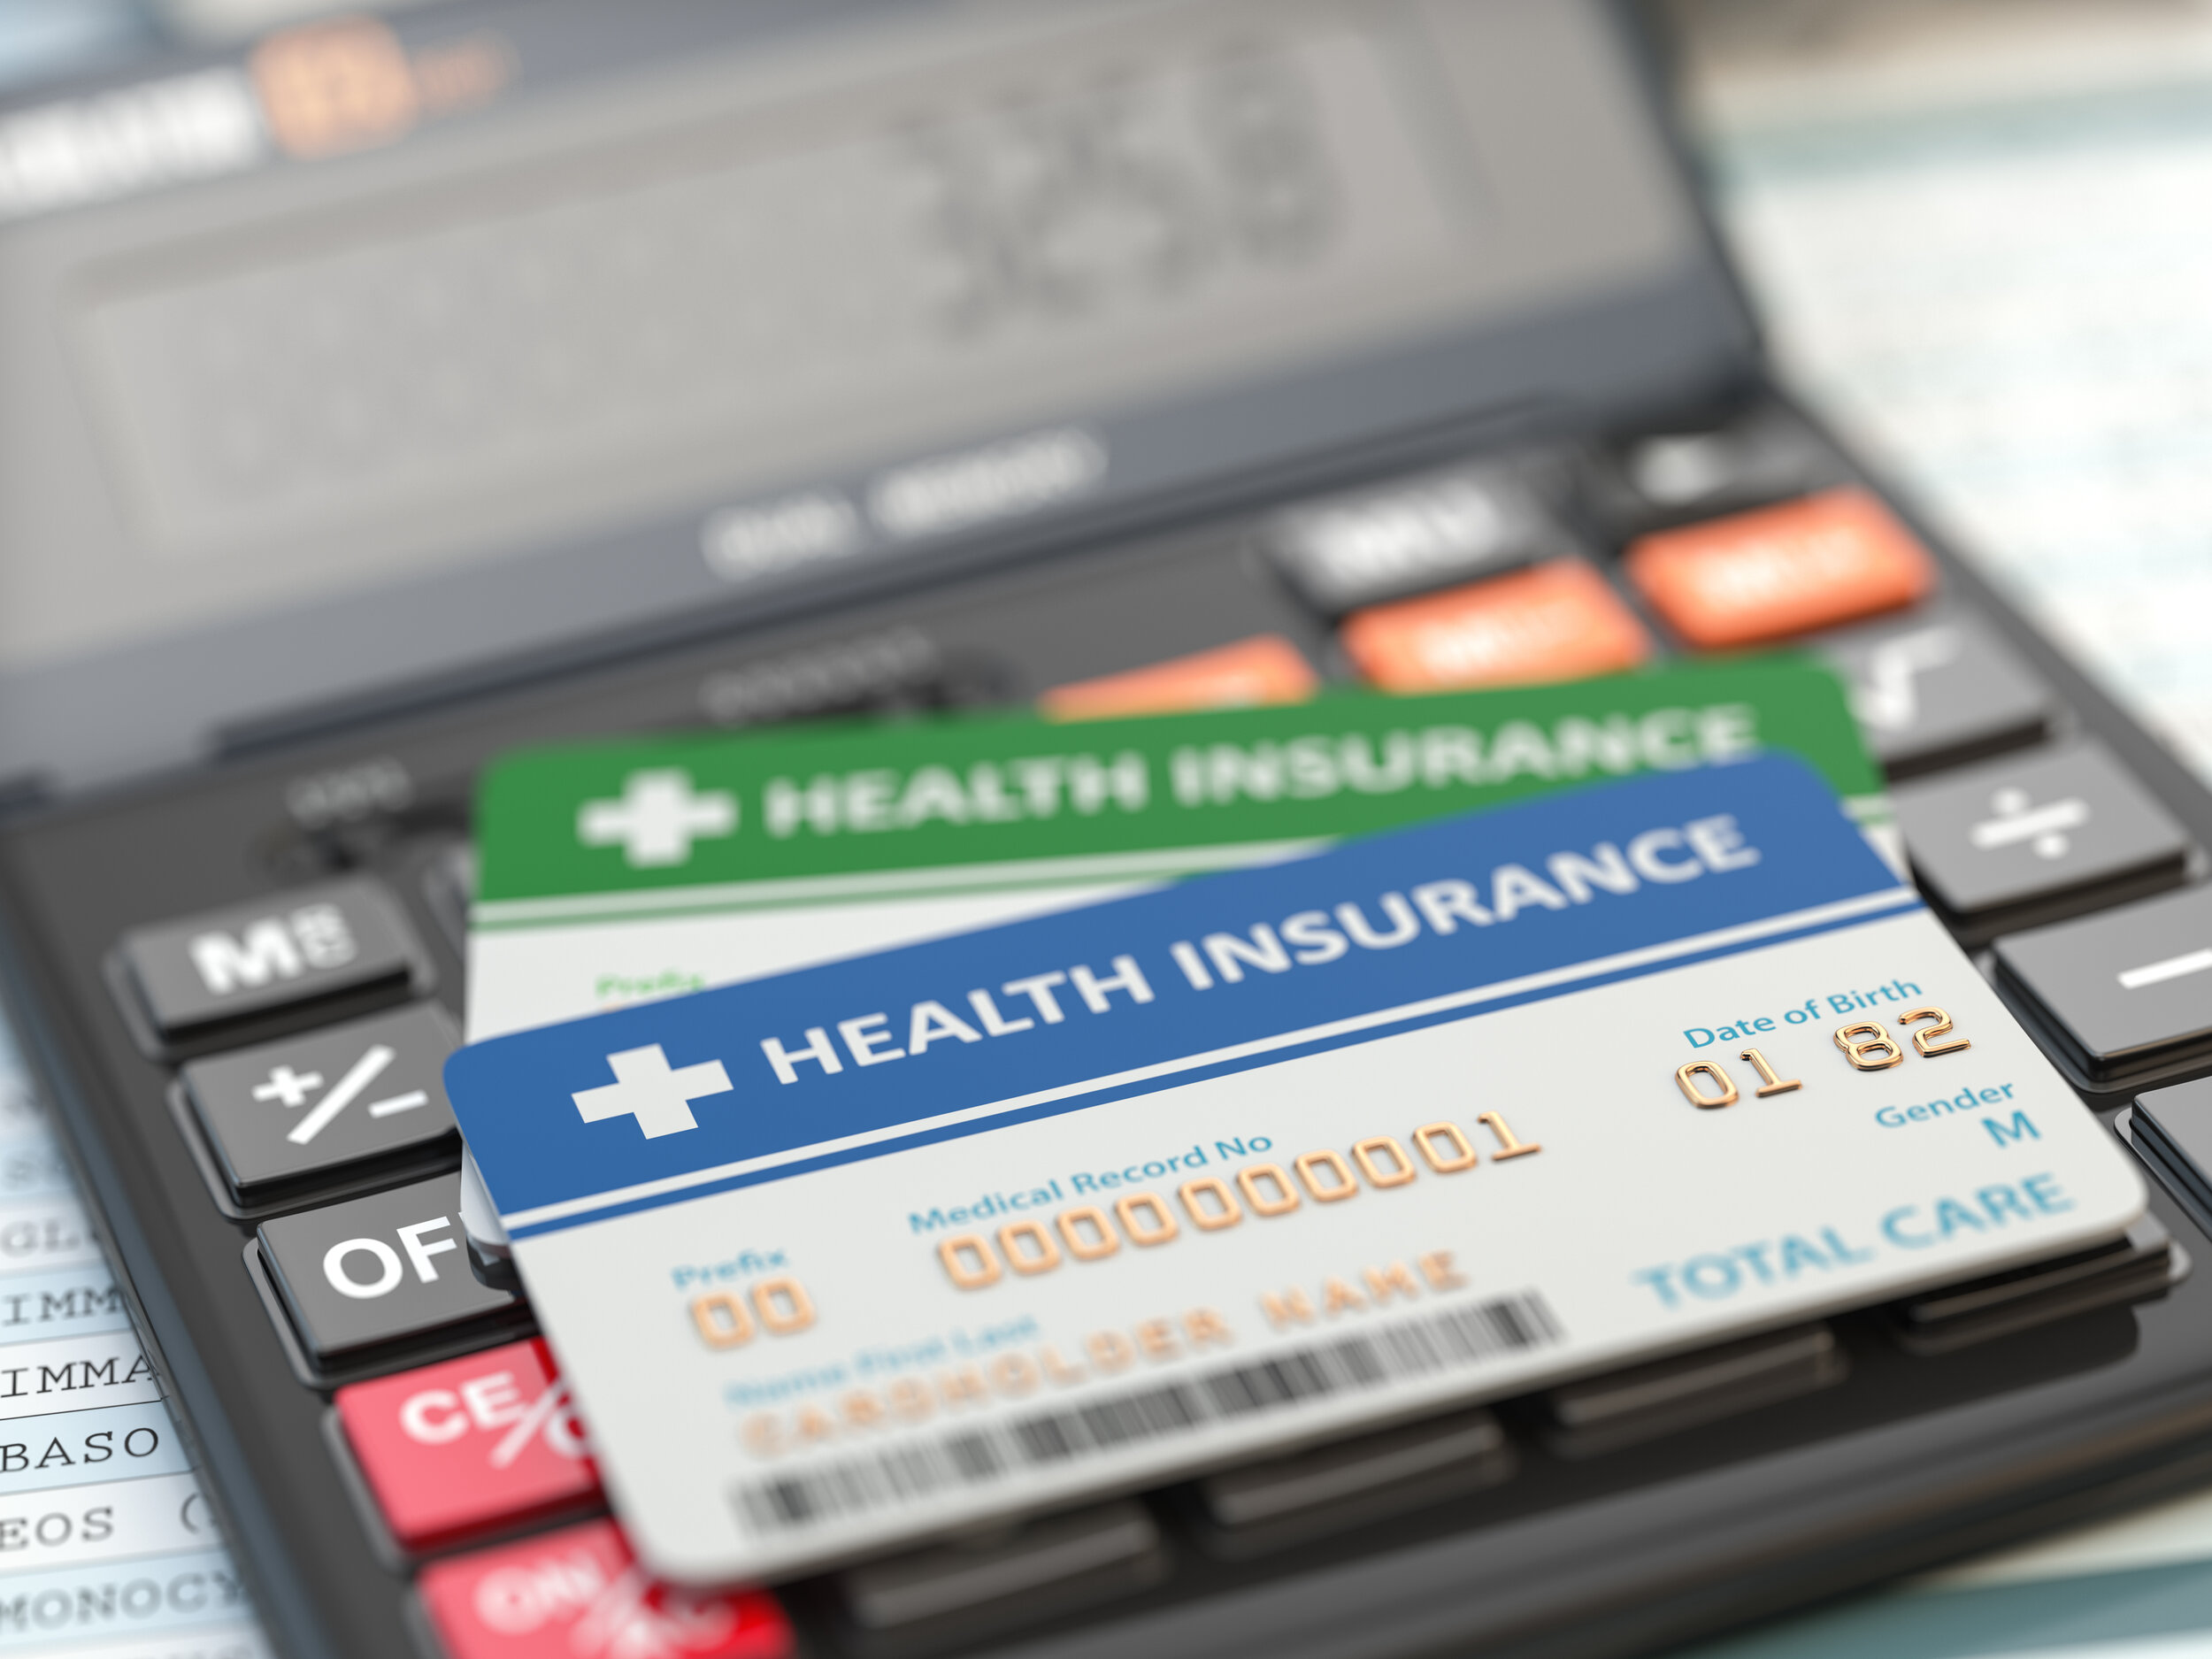 medical-insurance-cards-on-the-calculator-health-c-DZGUK9R.jpg